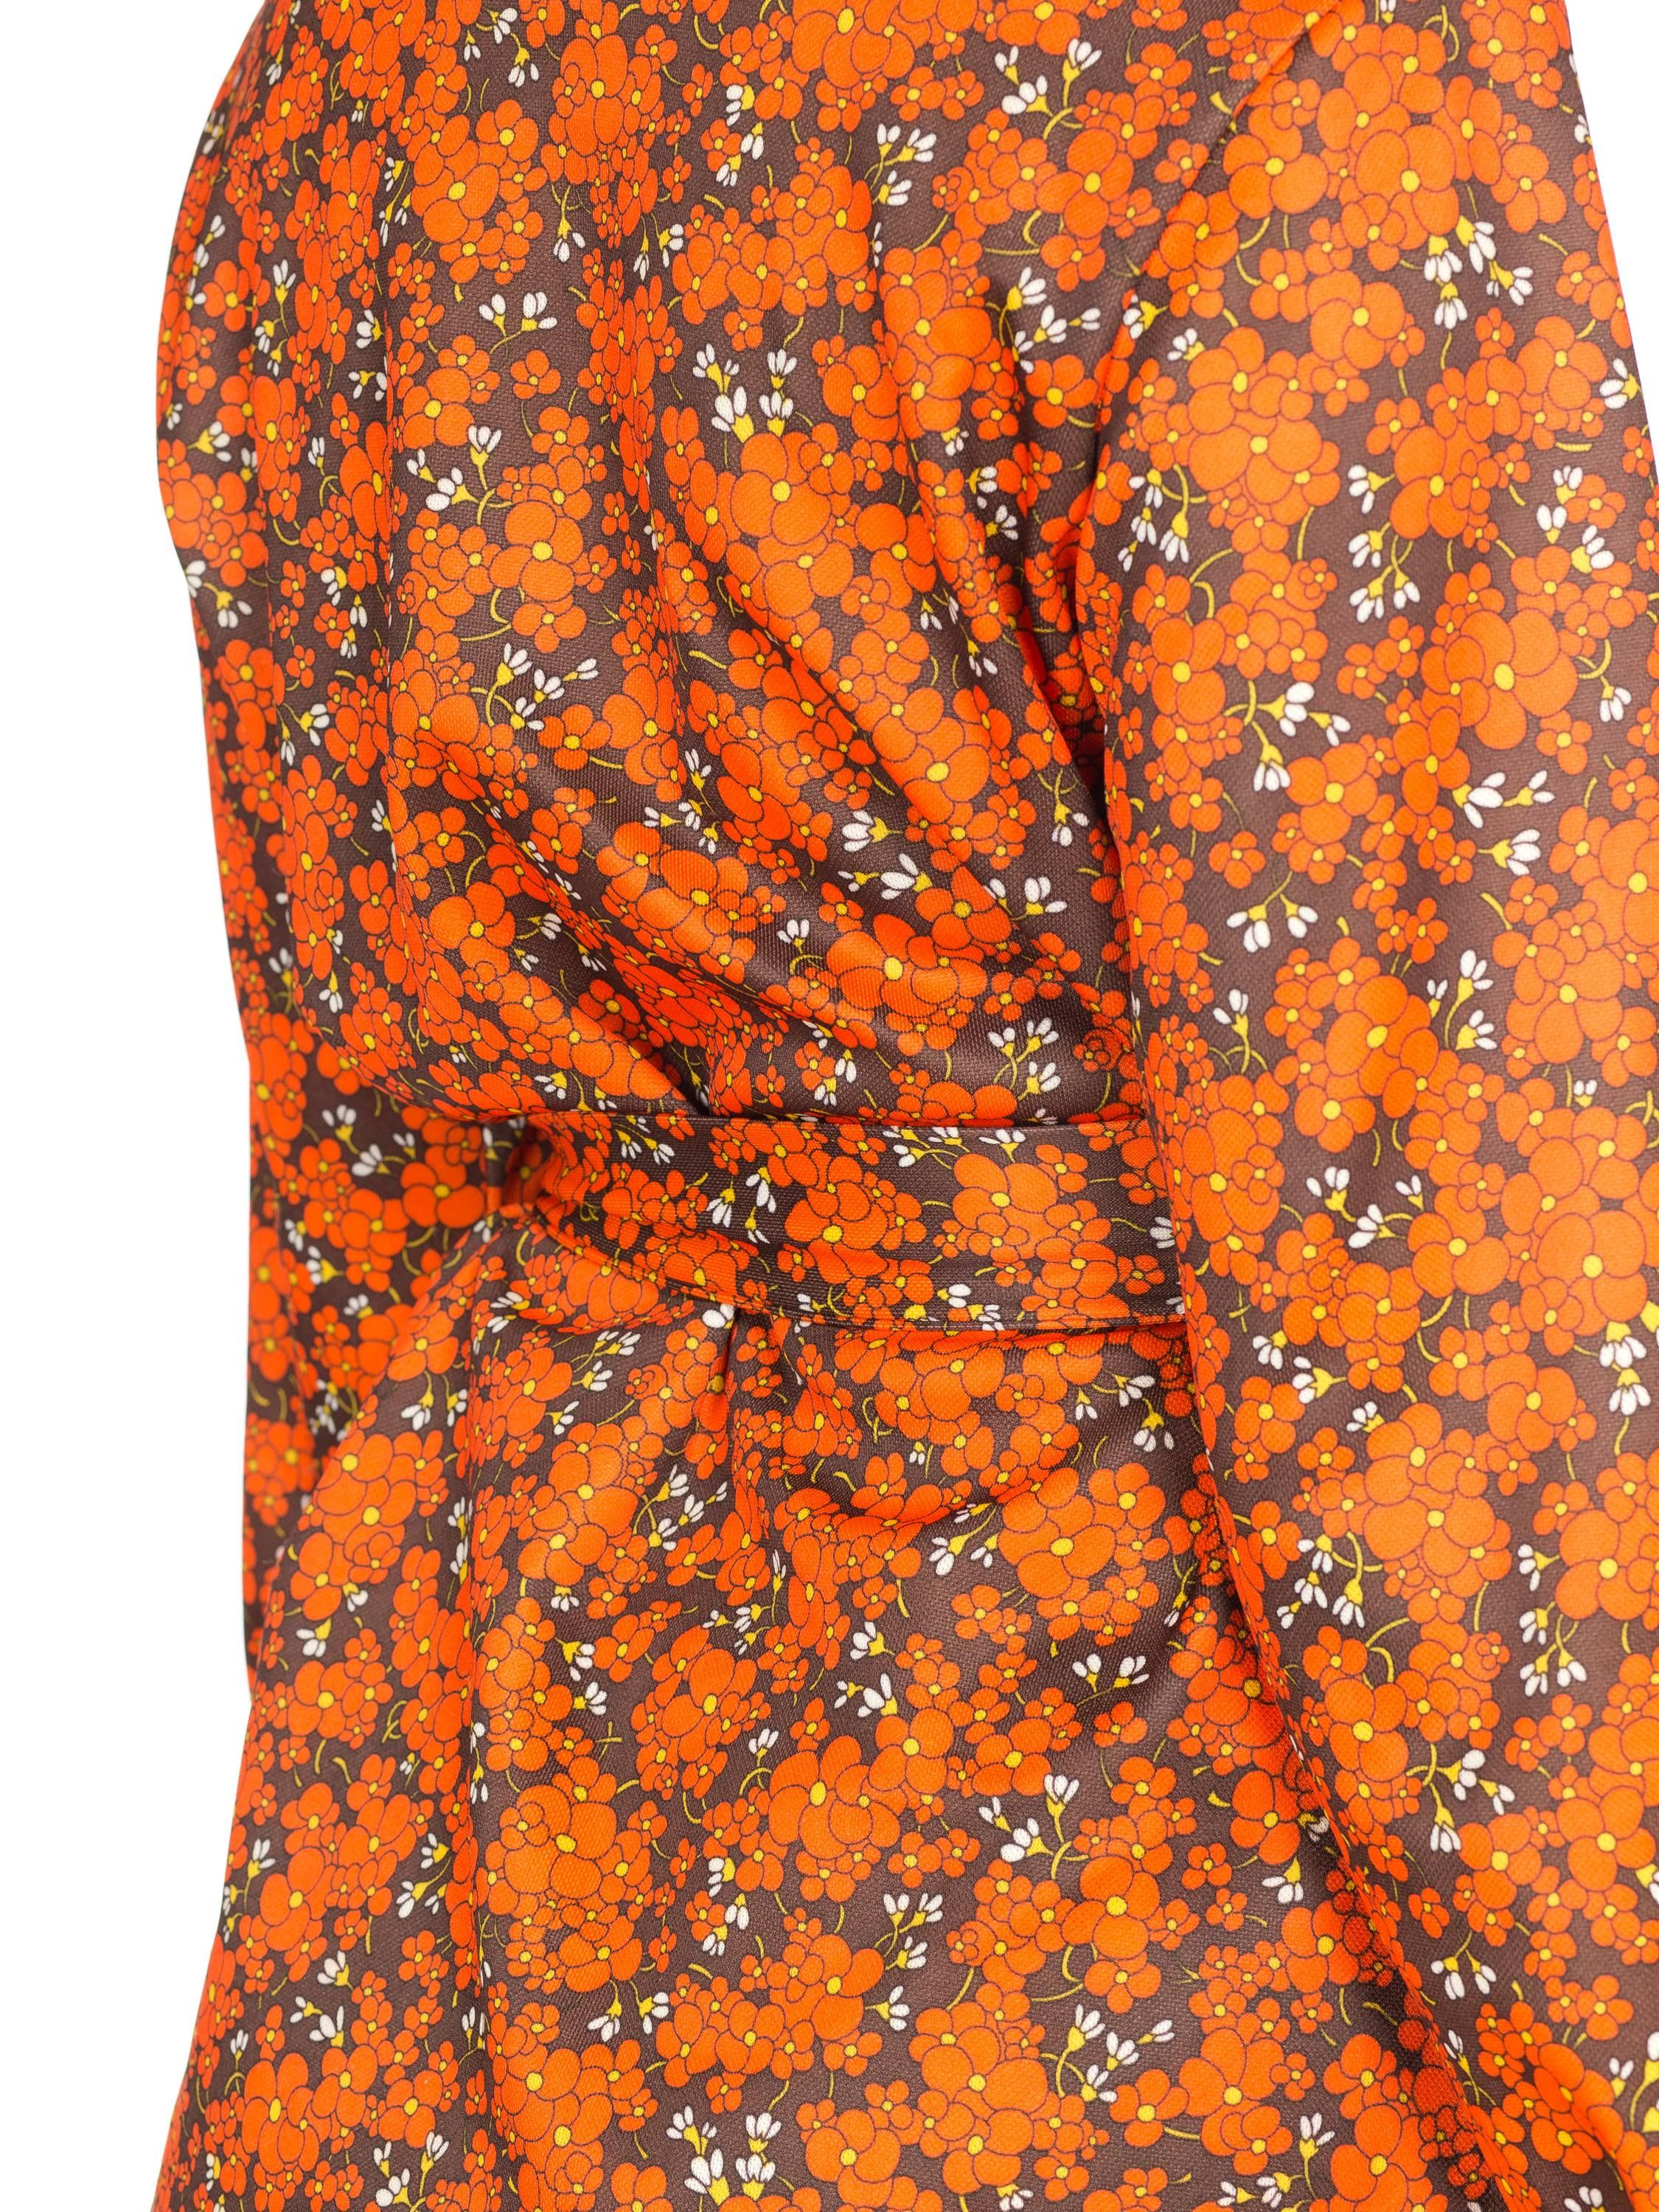 Orange and Brown Floral Mod Disco Pantsuit Set, 1970s 7